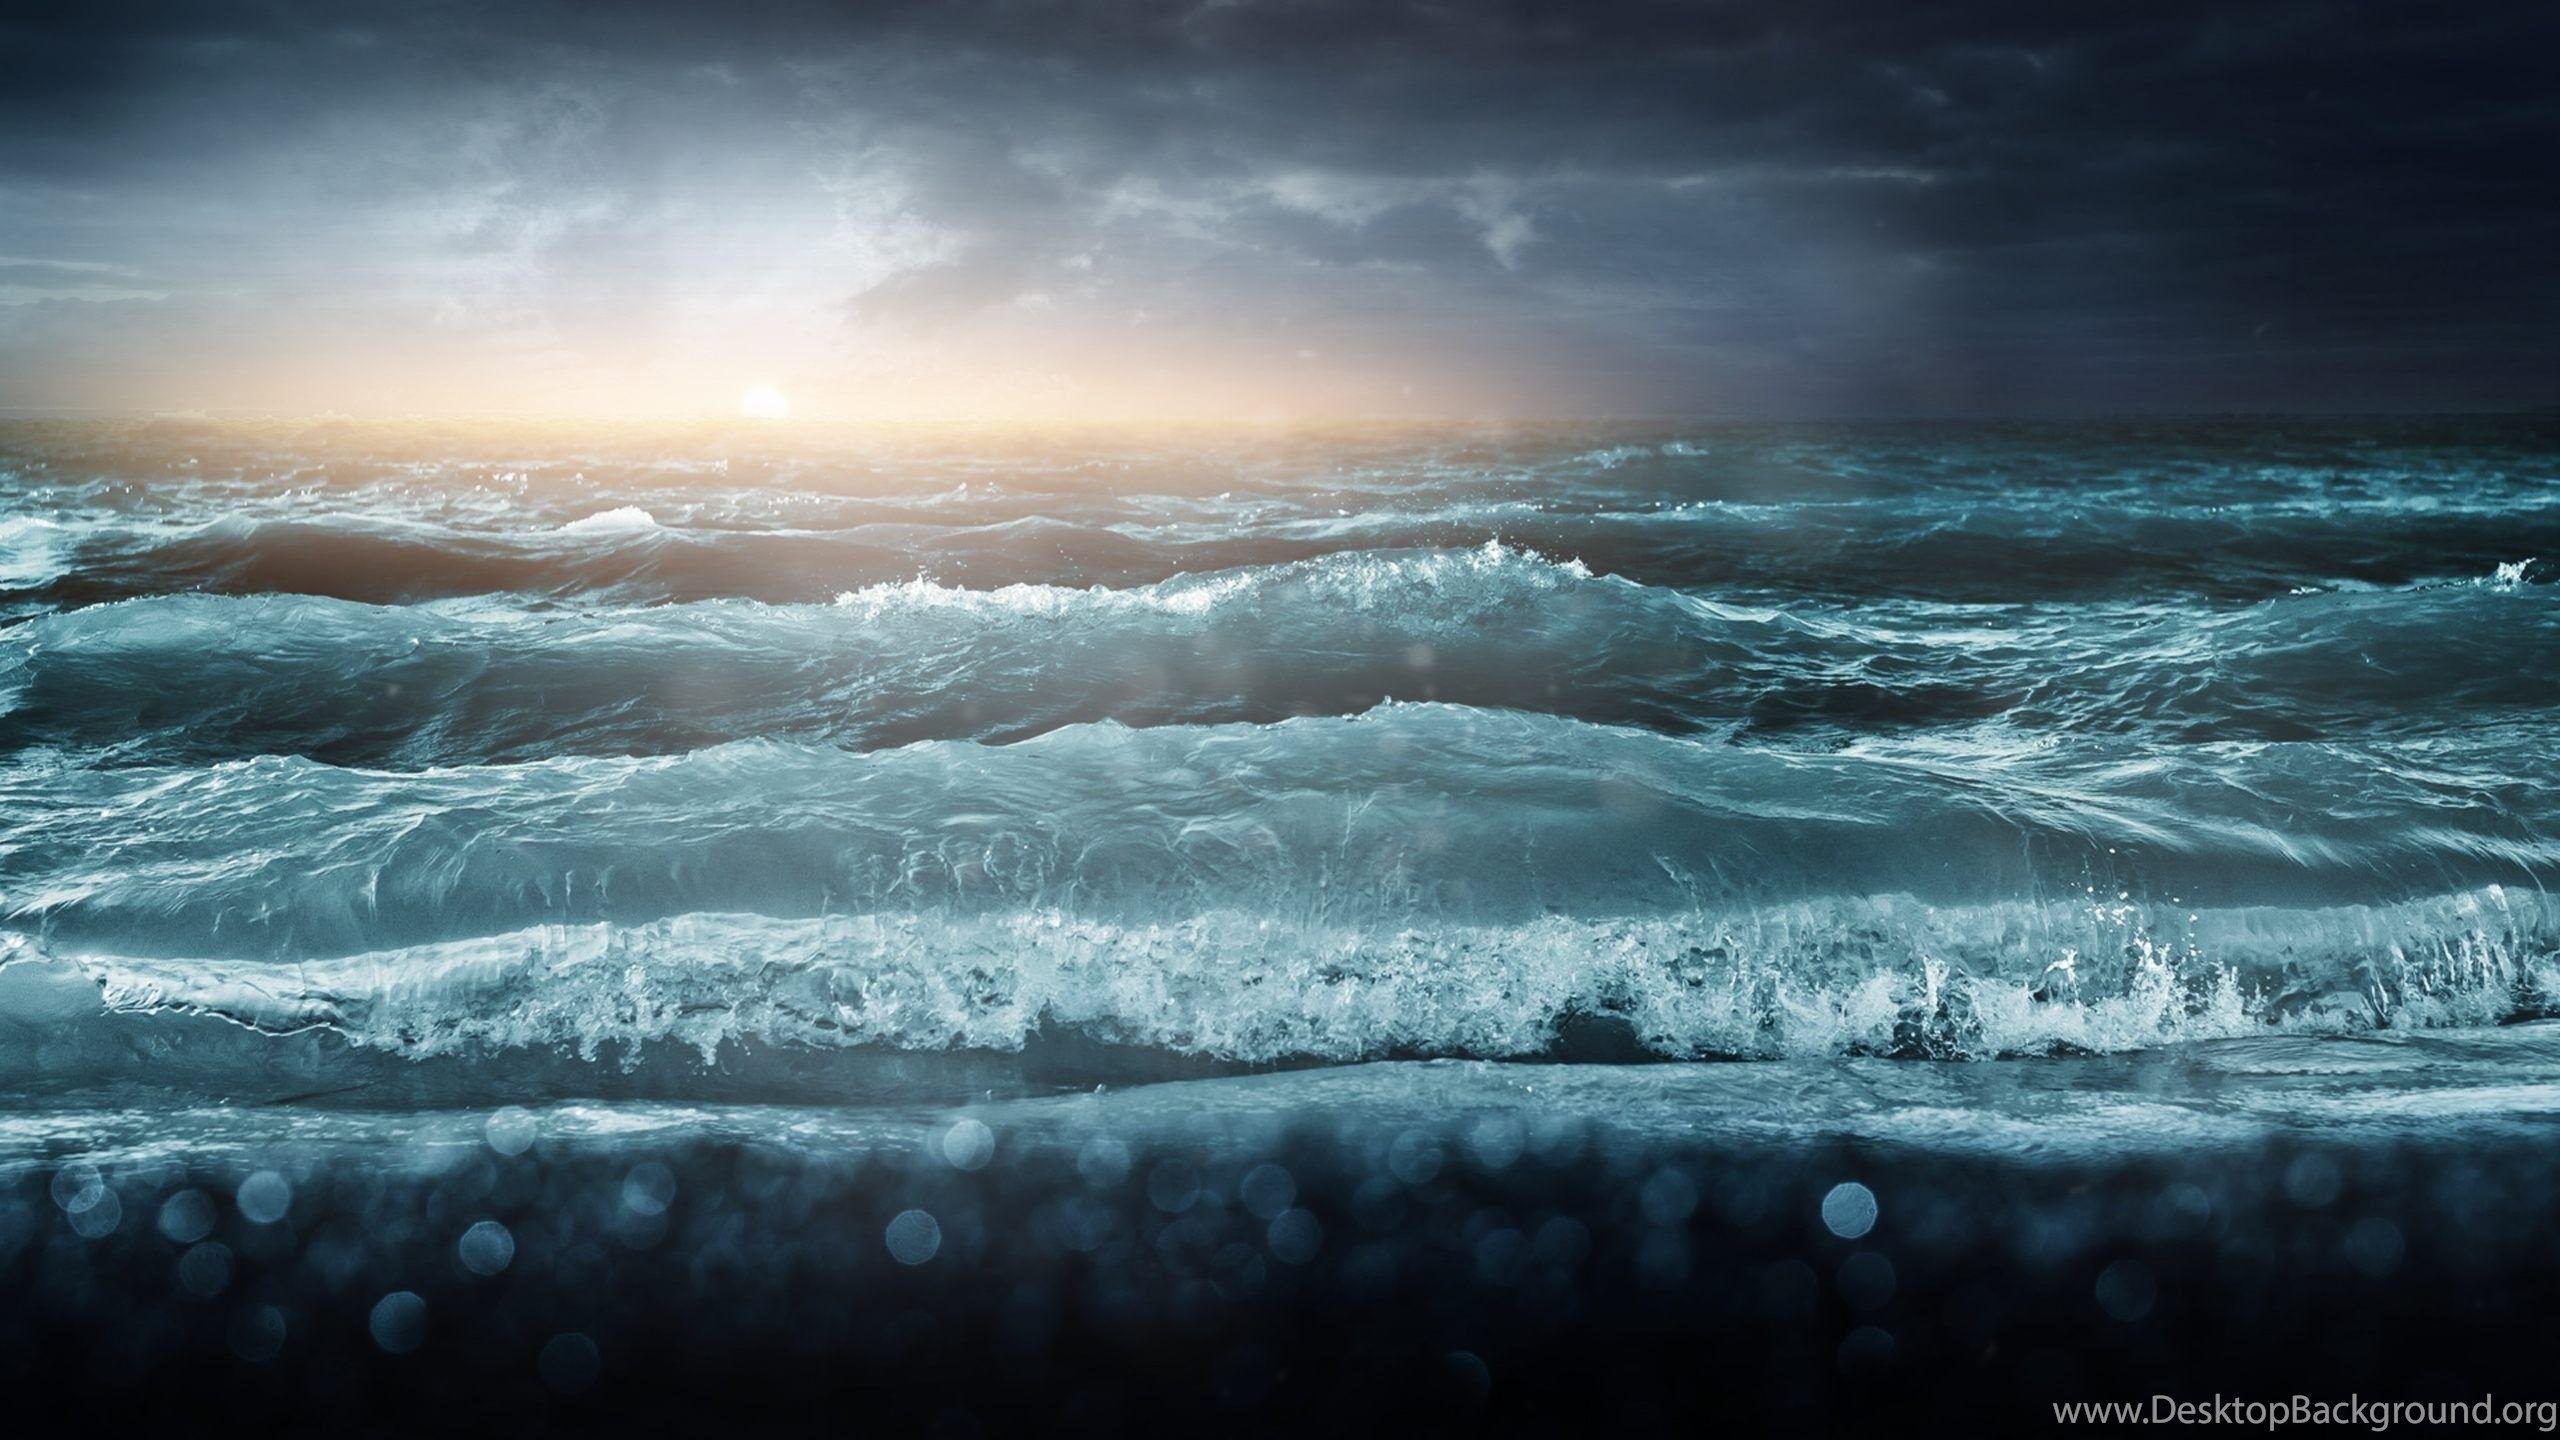 Ocean Waves And Storm Wallpaper For Desktop, PC & Mobile Desktop